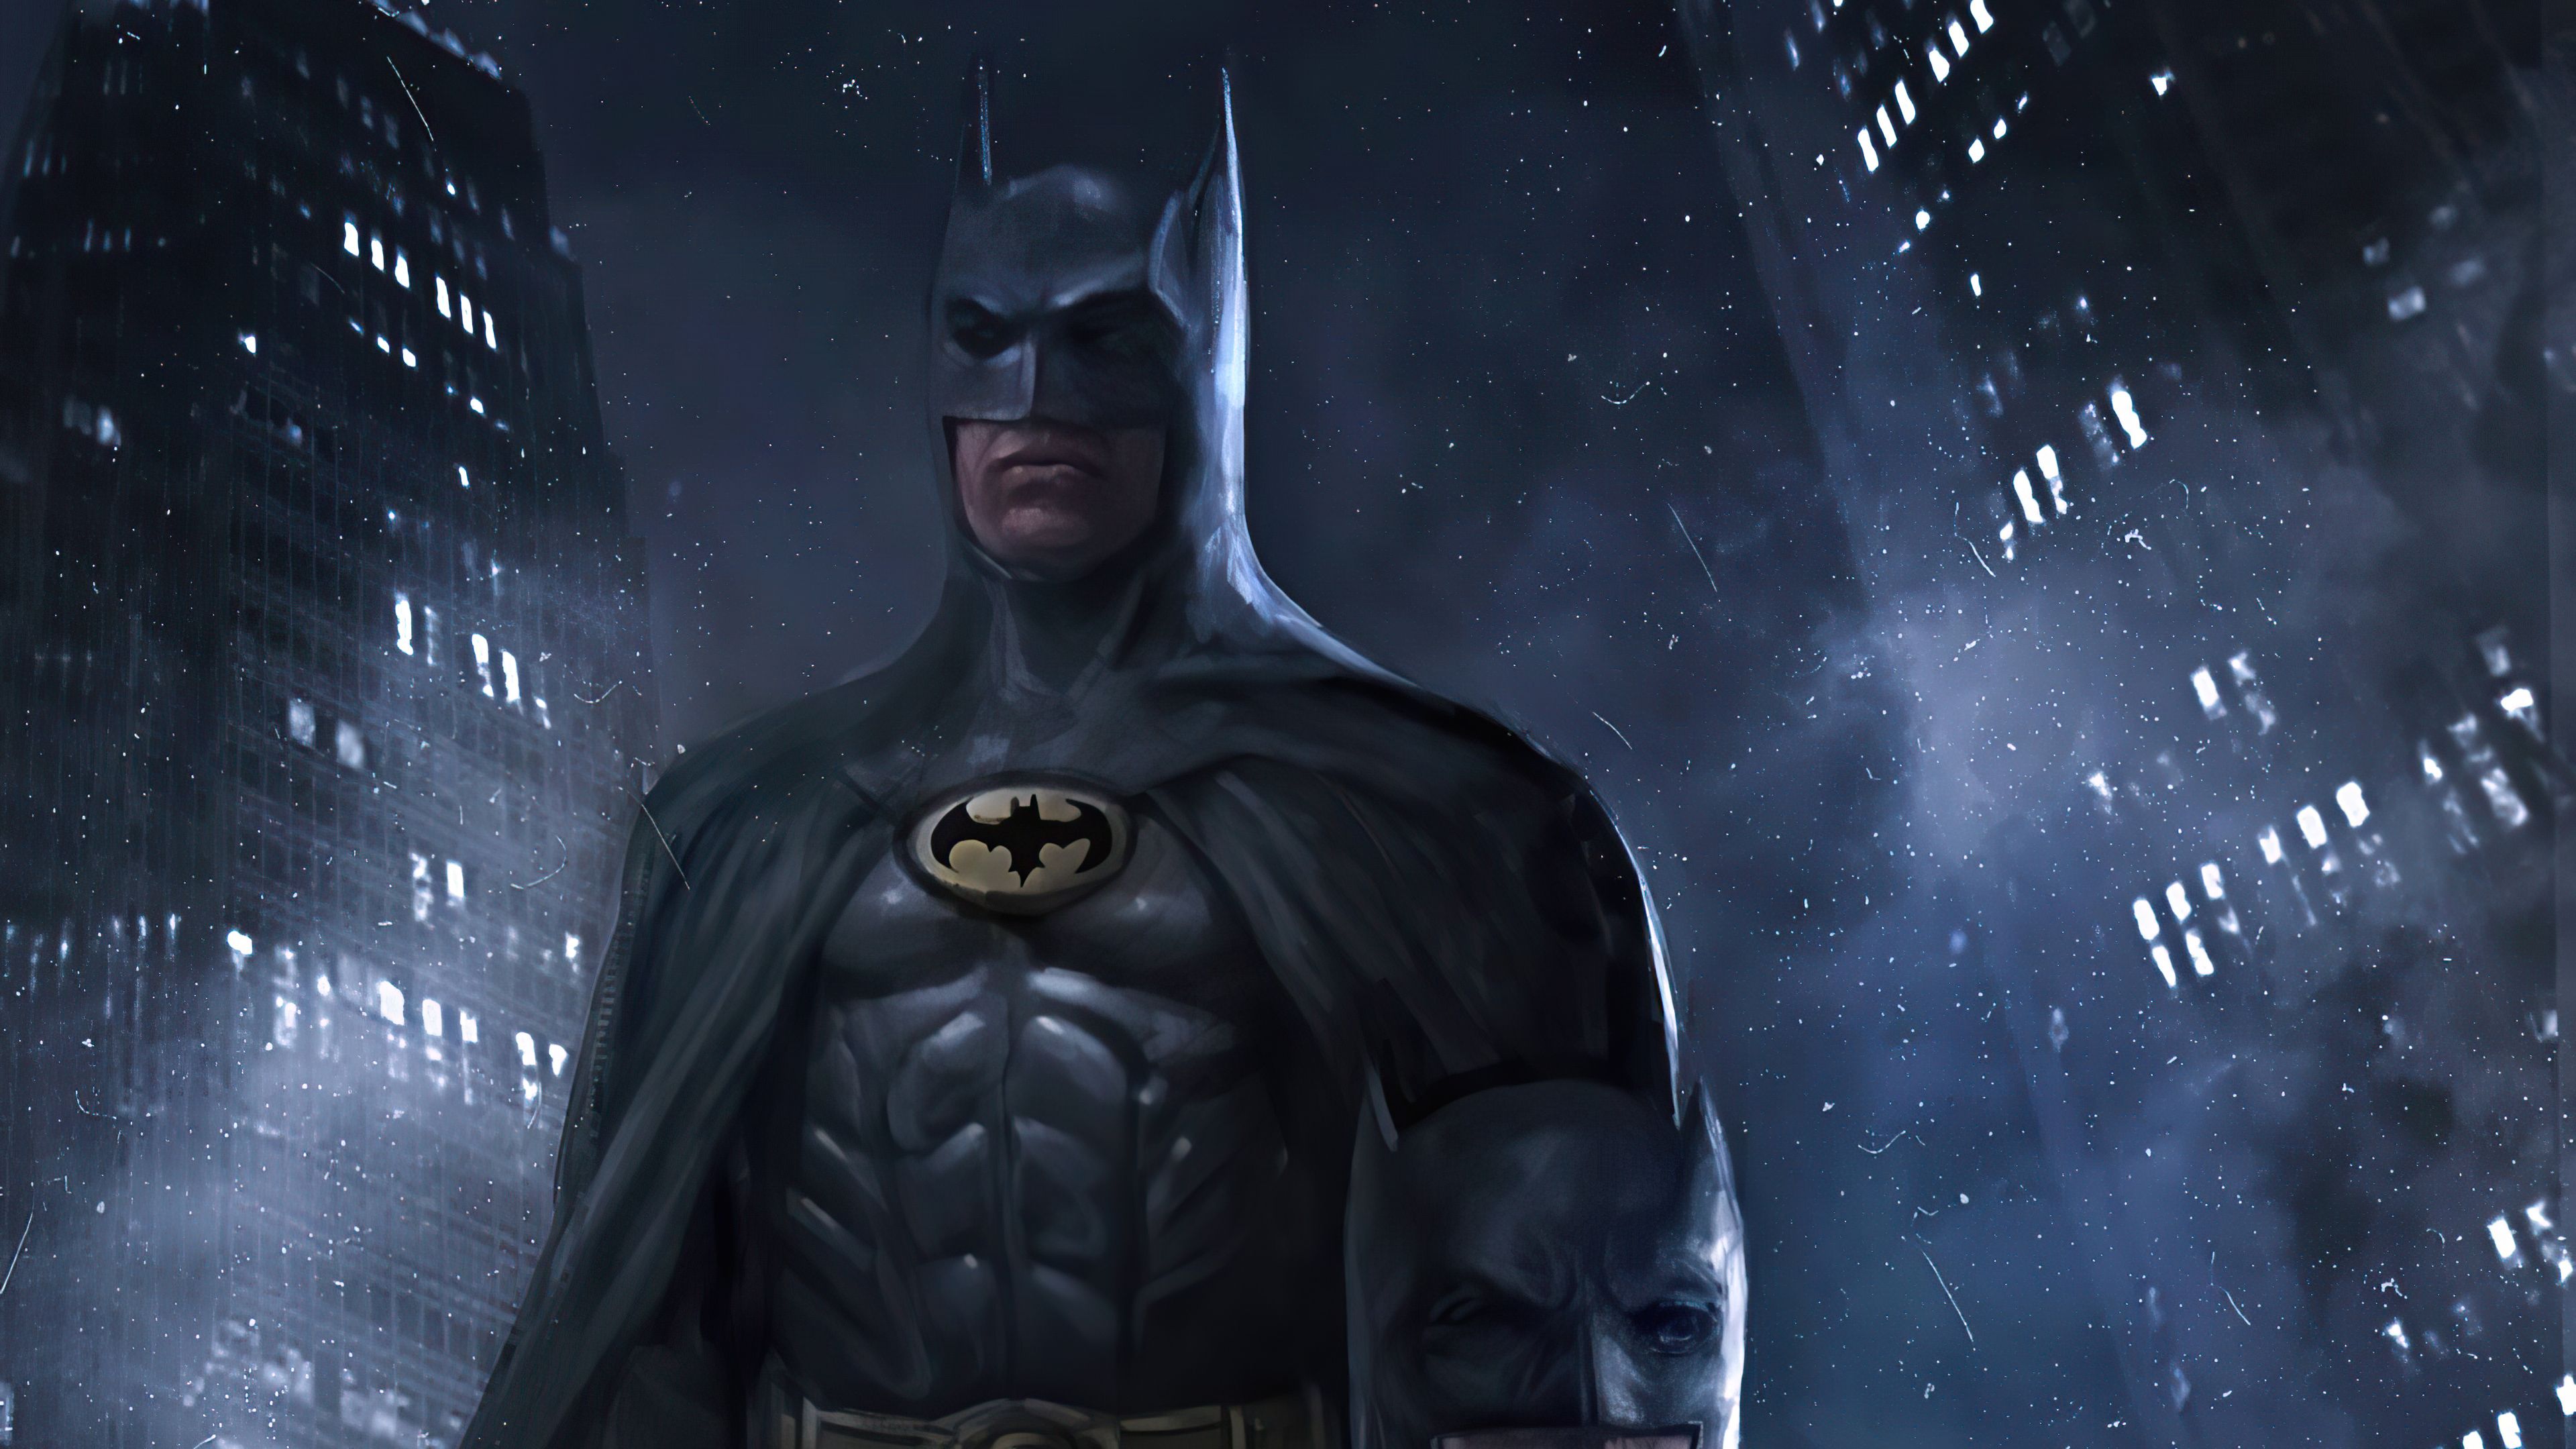 Batman Michael Keaton Artwork, HD Superheroes, 4k Wallpaper, Image, Background, Photo and Picture